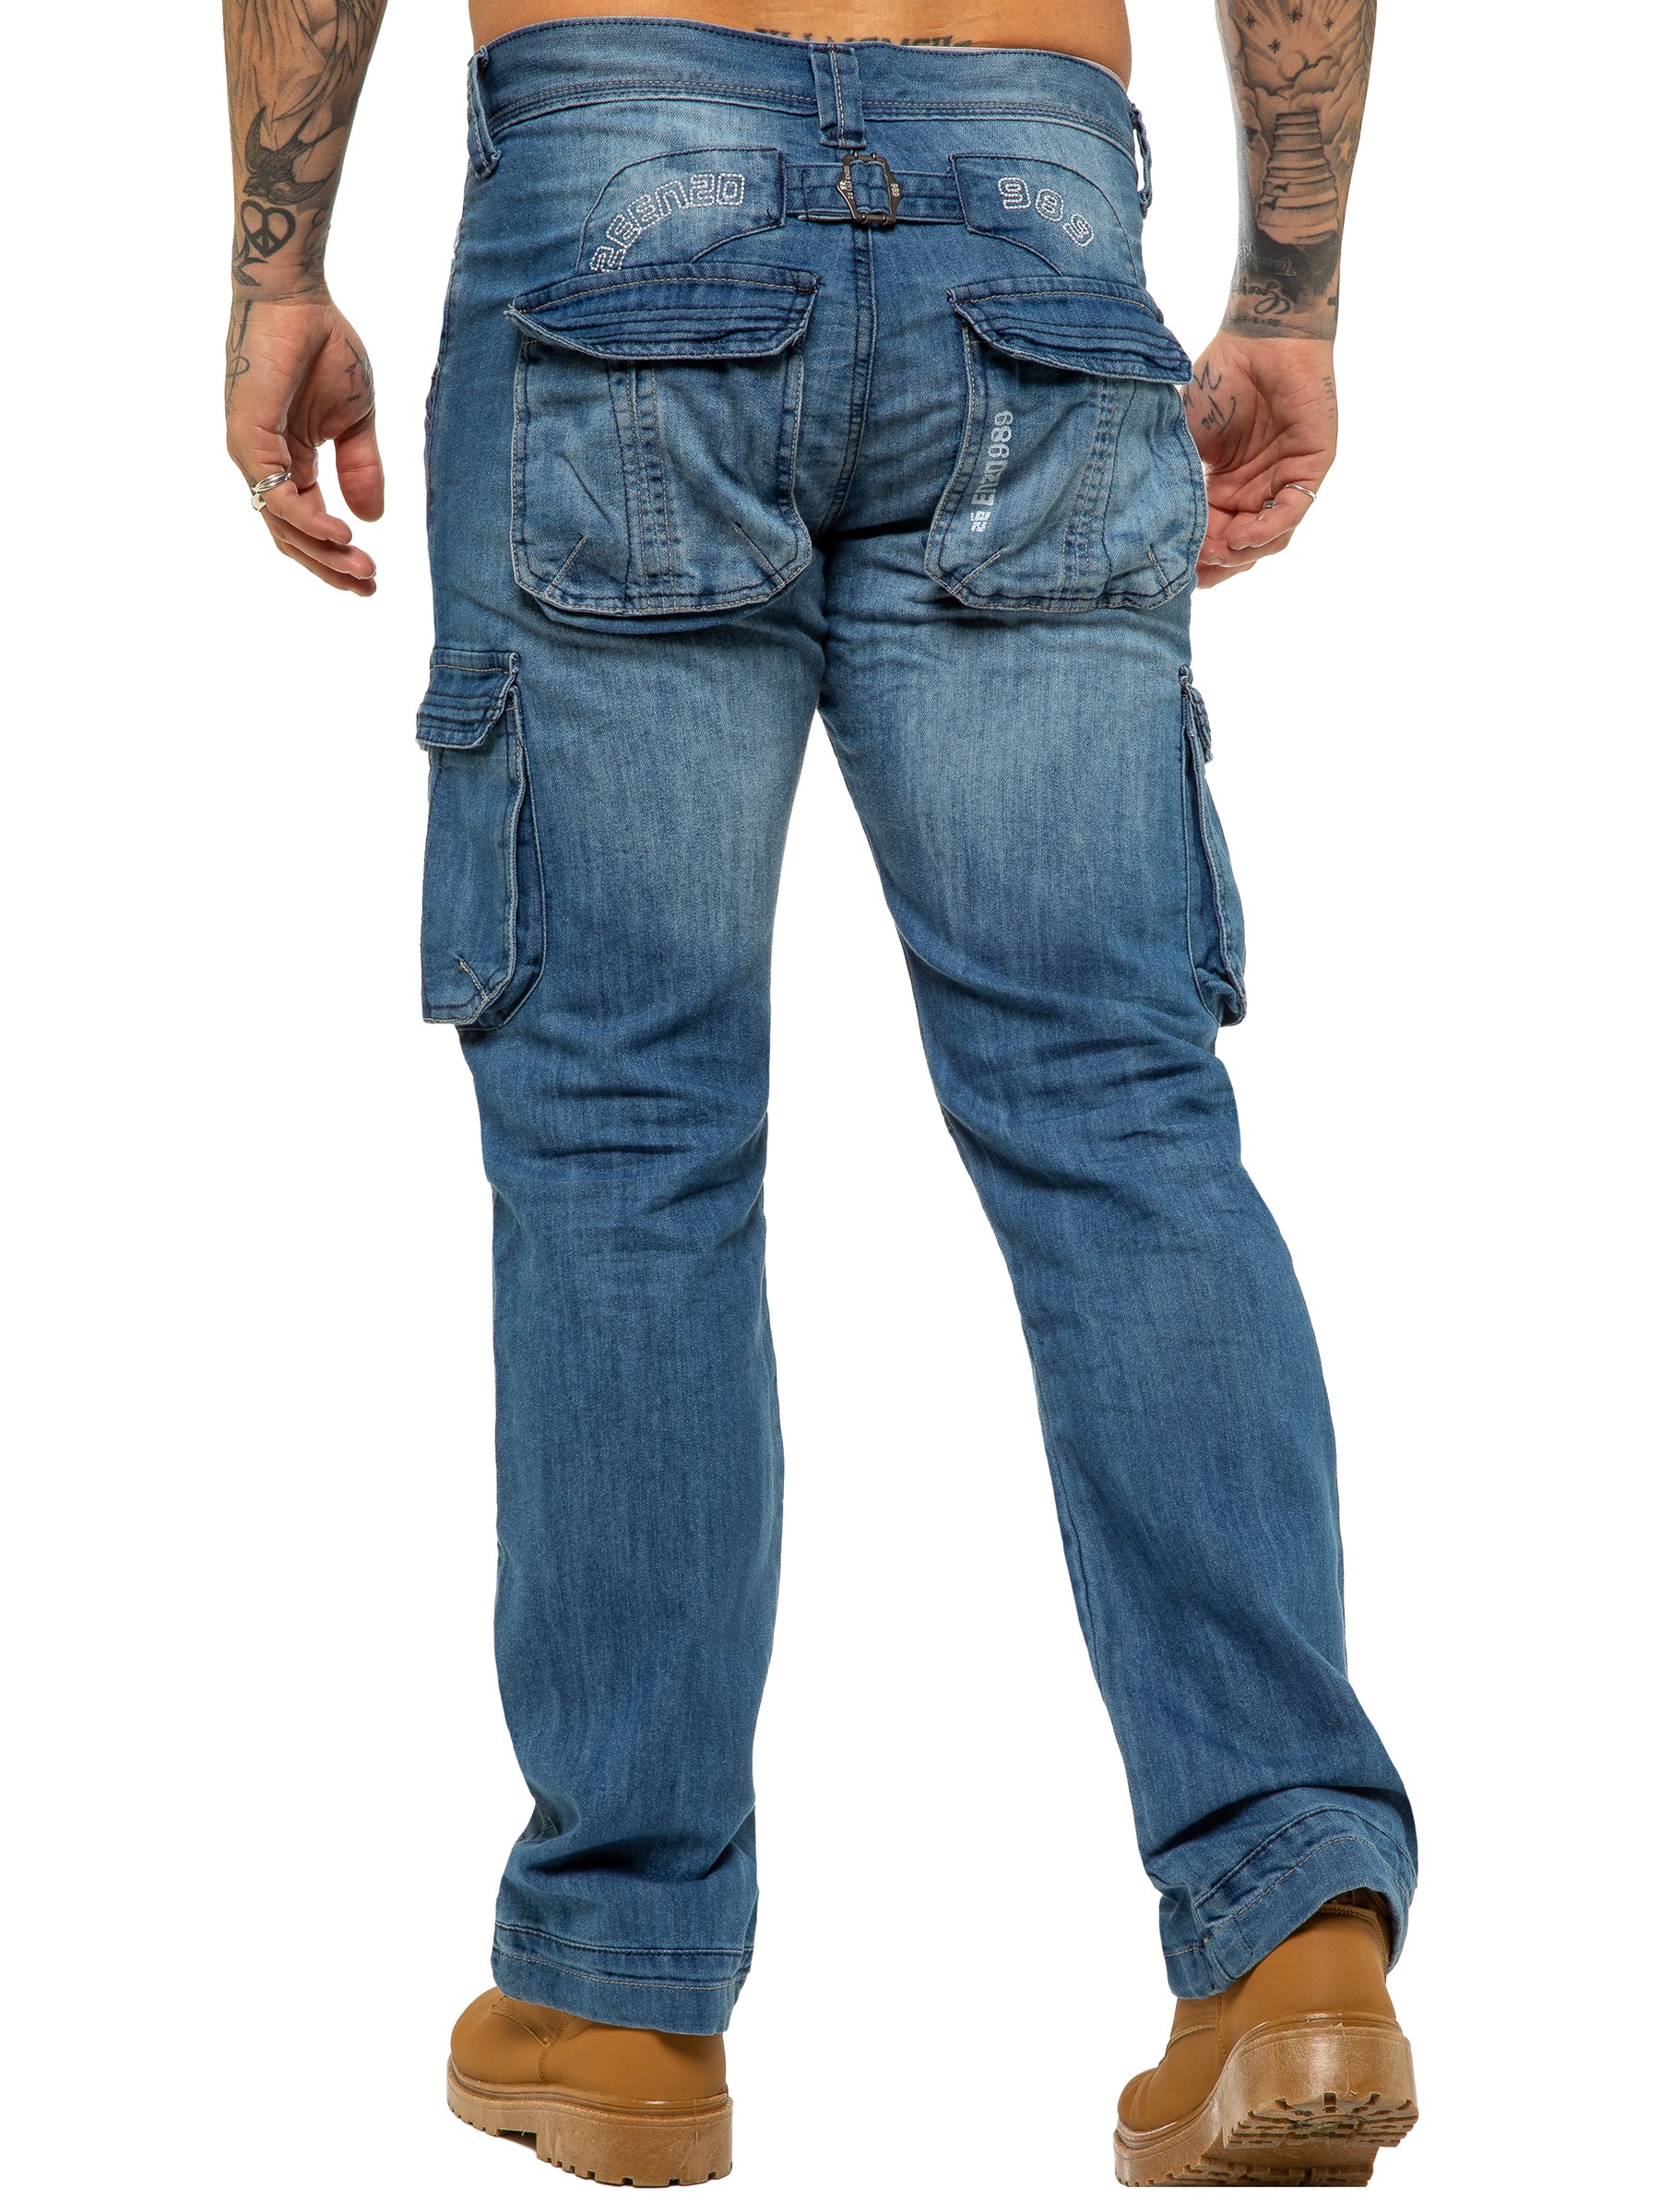 Mens Pockets Cargo Combat Denim Pants Skinny Jeans Casual Slim Trousers  Bottoms | eBay